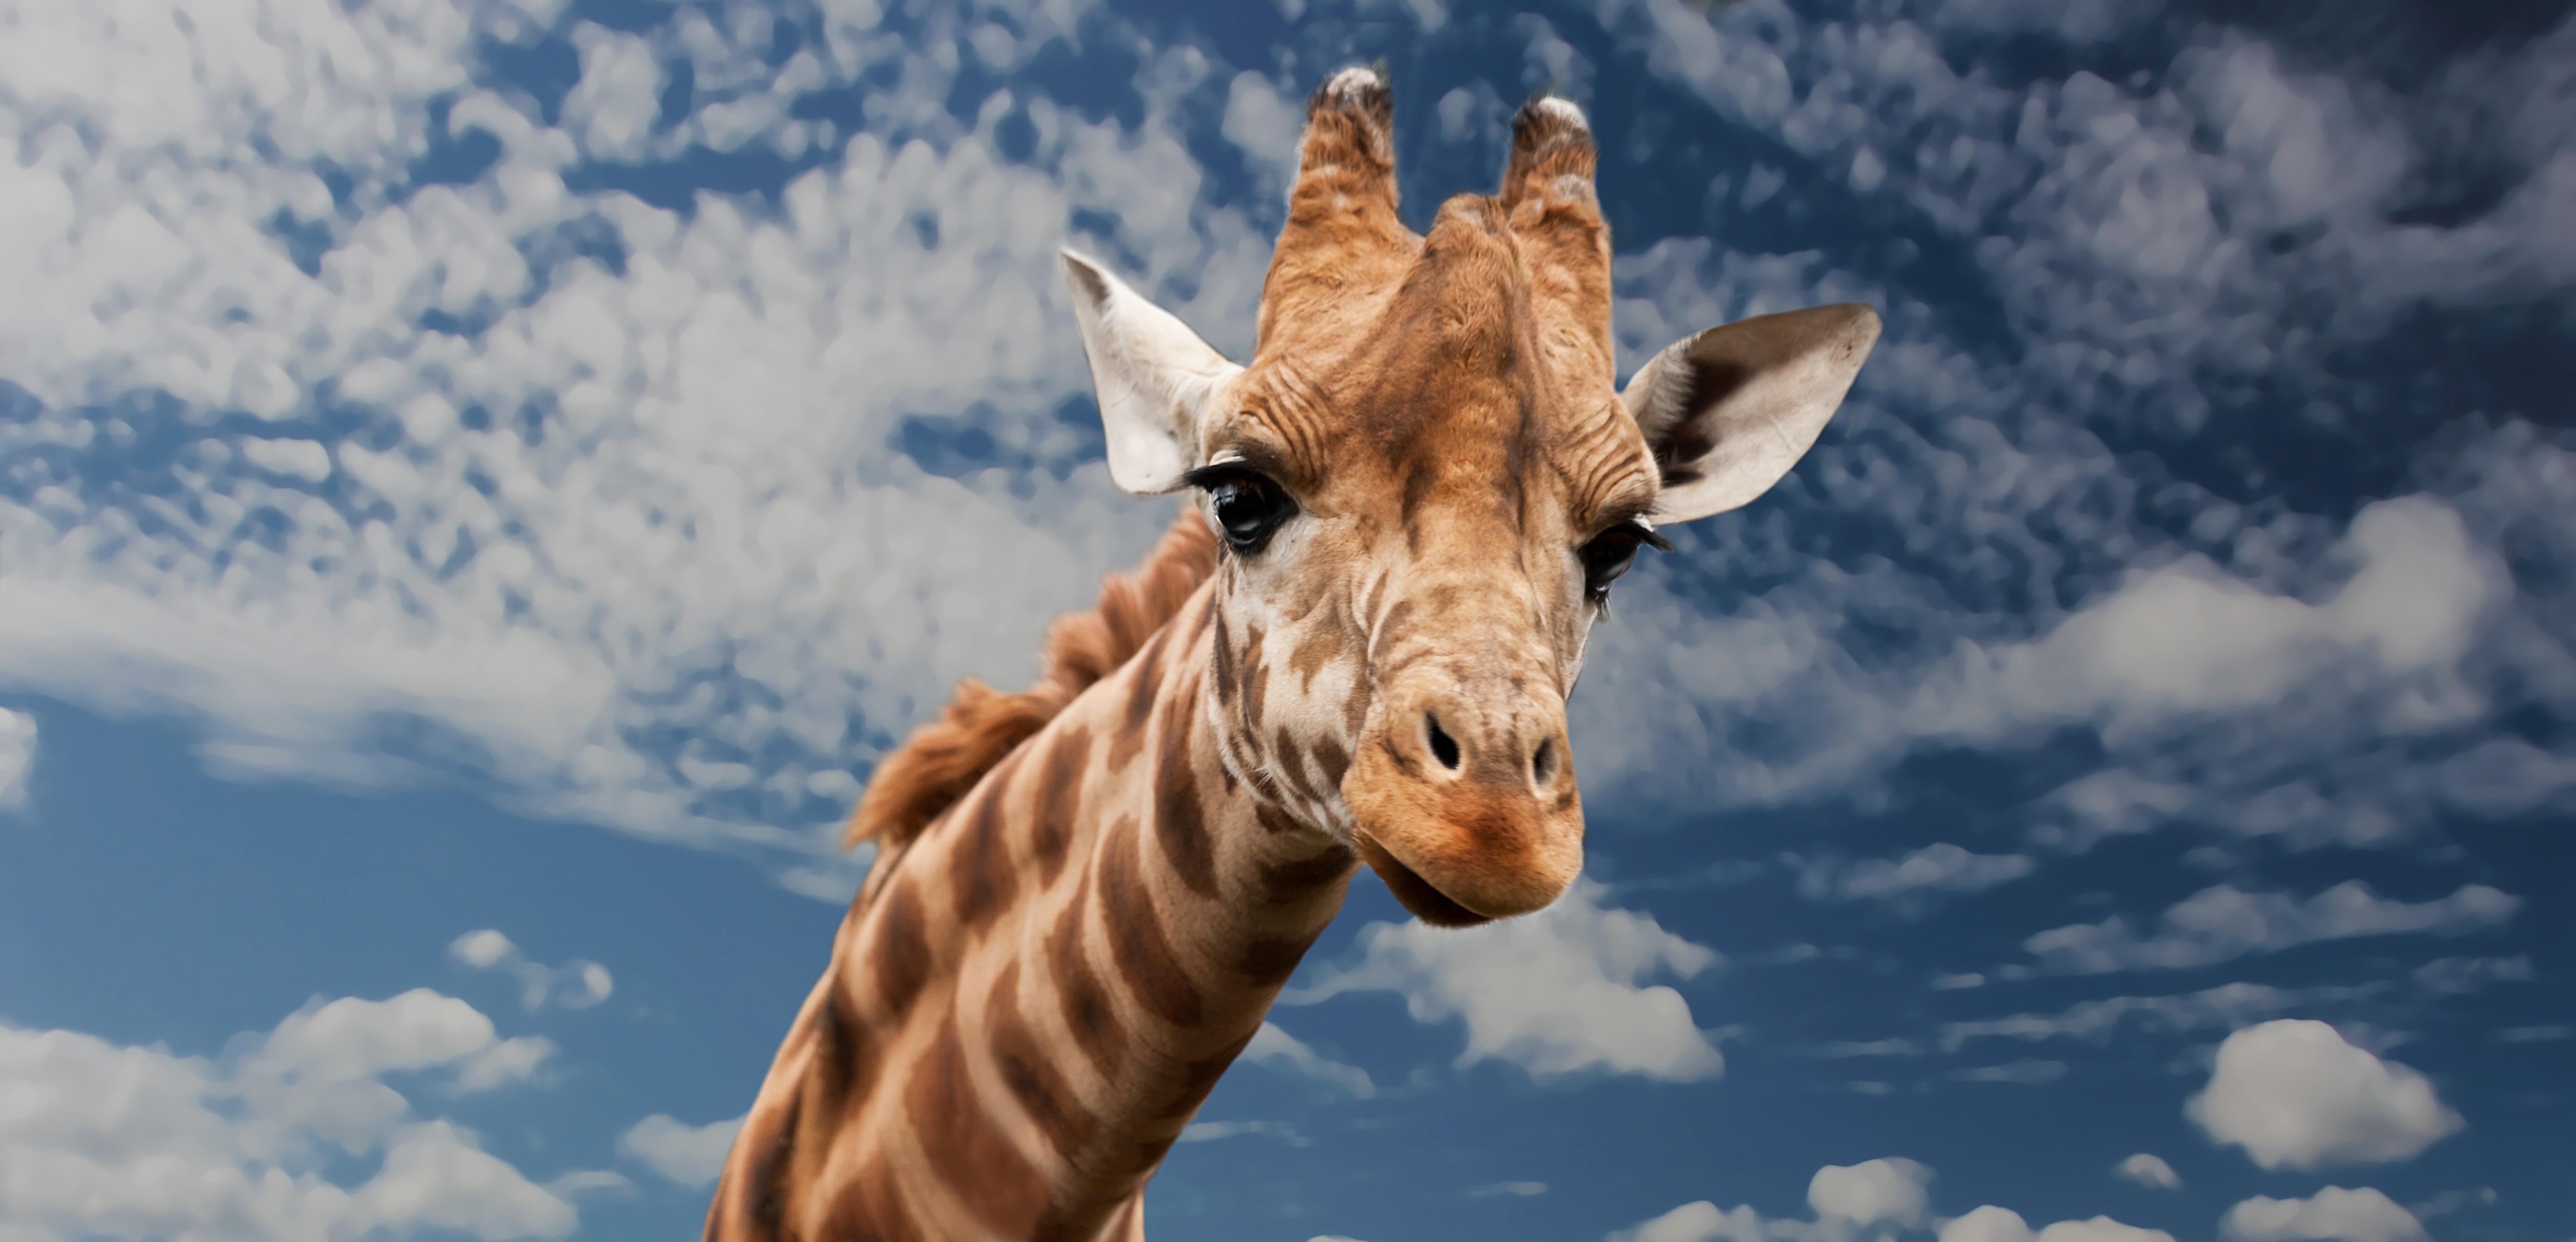 wildlife giraffe free stock photo by pexels